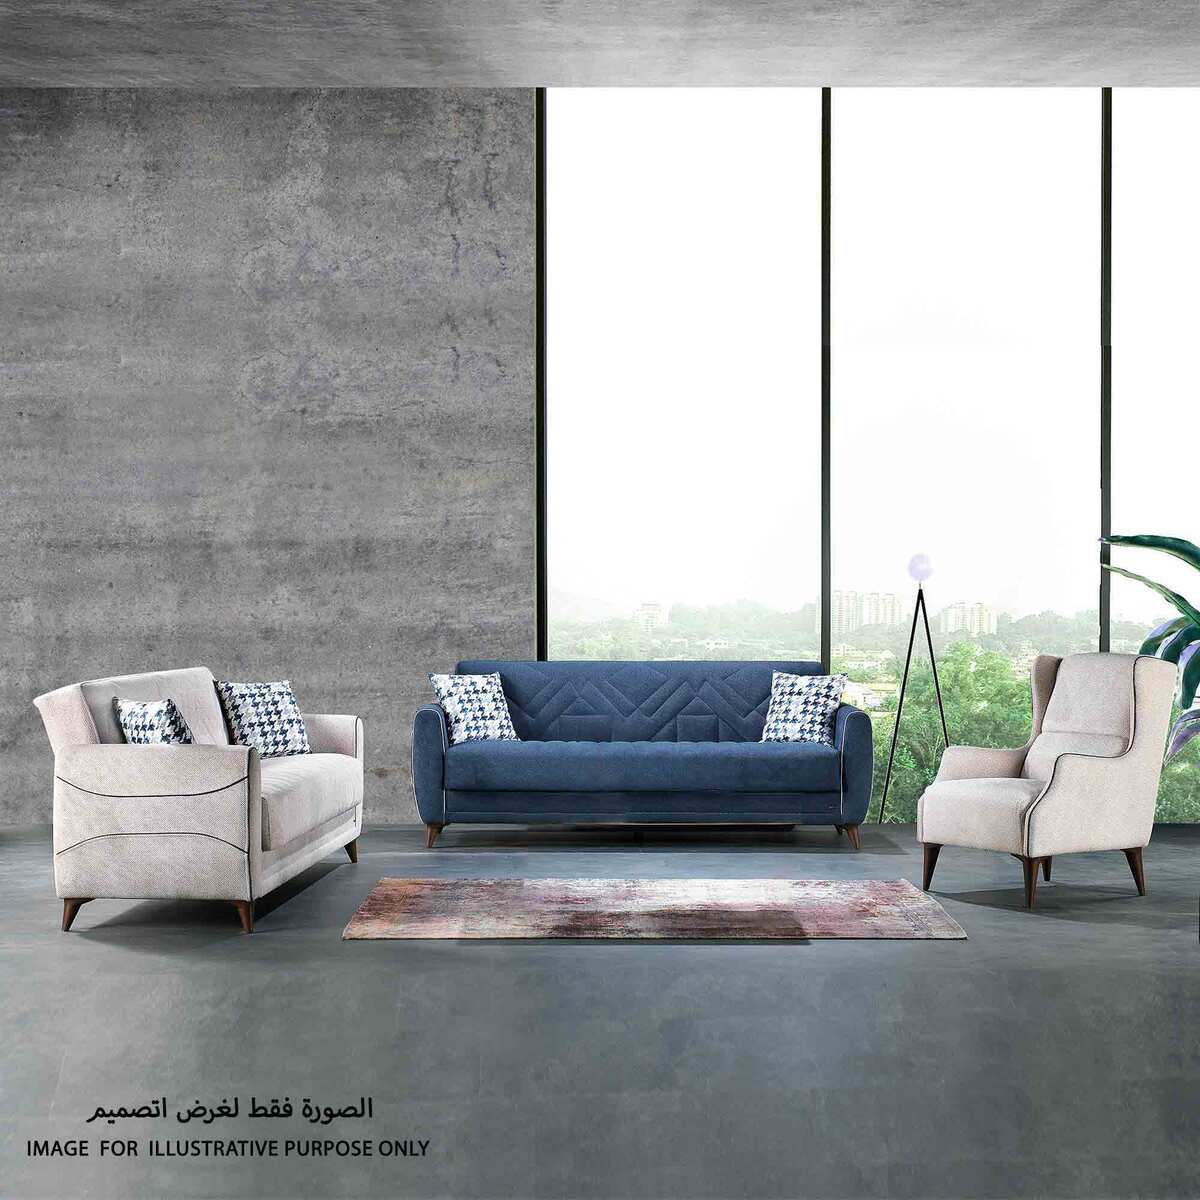 ELIS Sofa 3Pc Set-Size:1 Seater.Size:96x73x80 Cms(HxWxL),2-Seater Size:86x81x151 Cms (HxWxL),3-Seater Size:86x86x222 Cms (HxWxL)